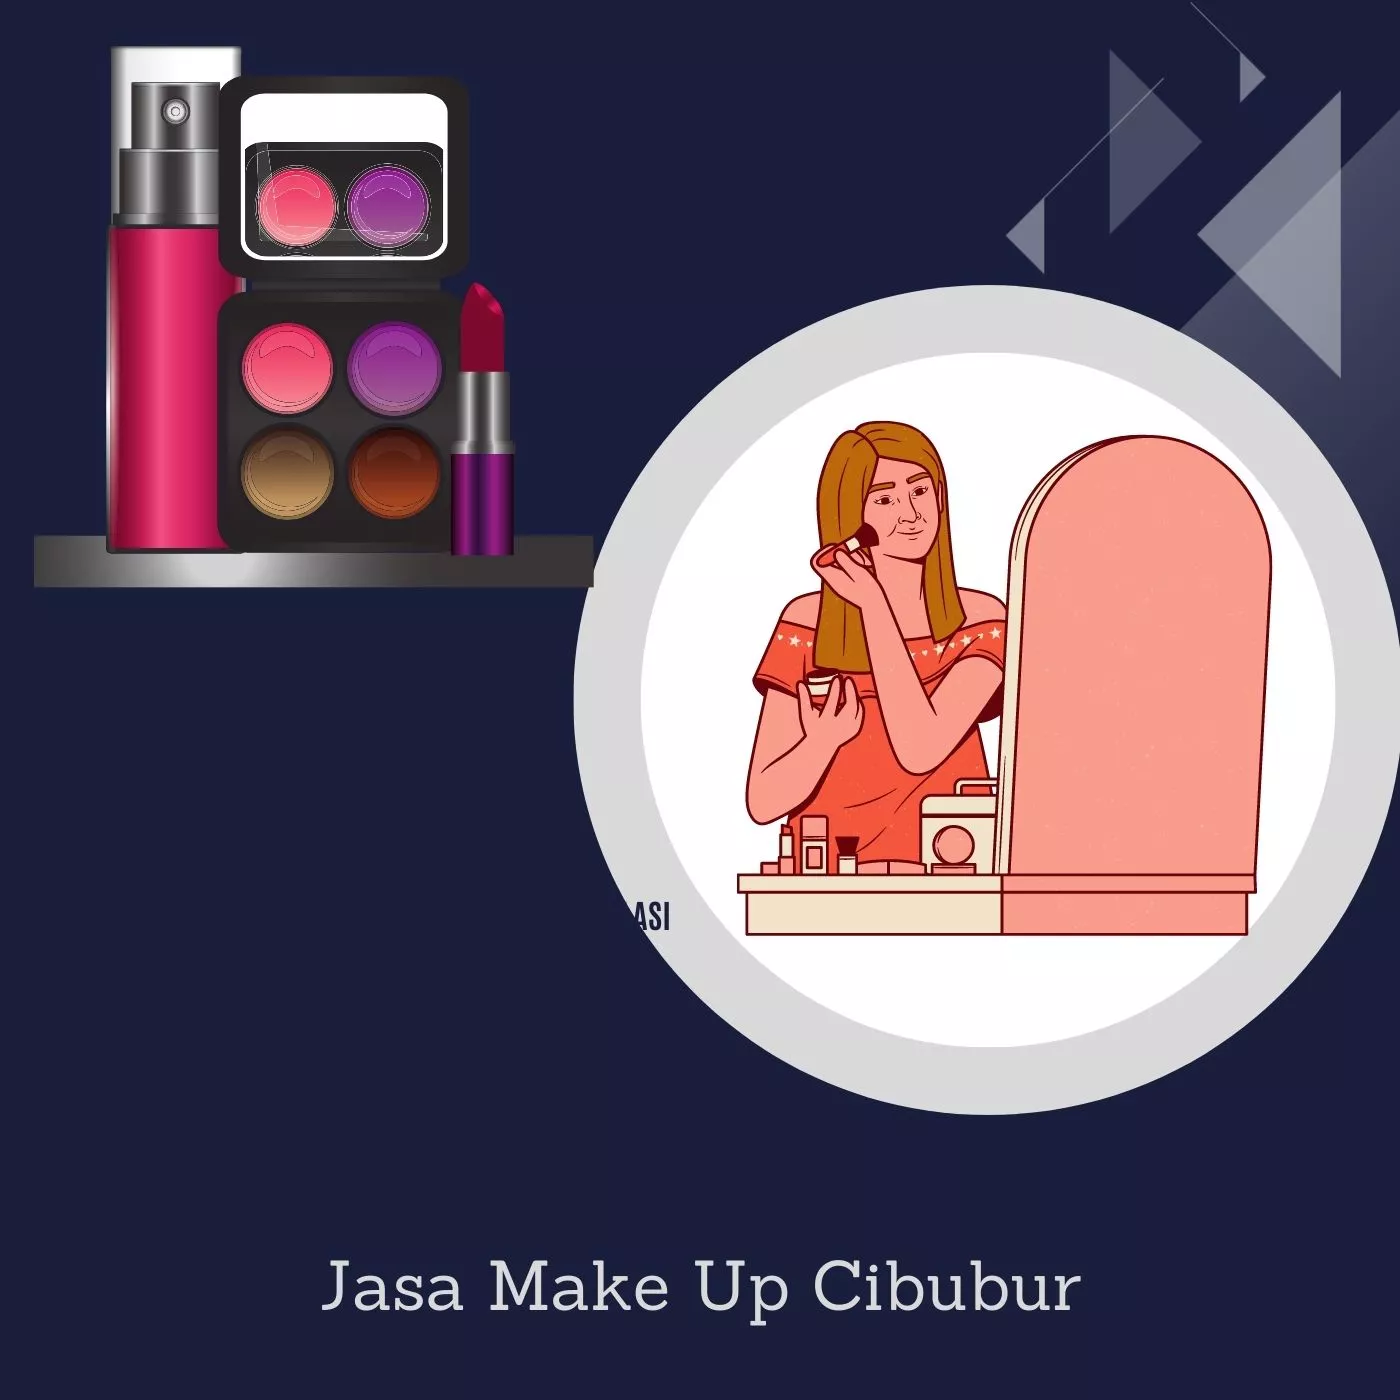 Jasa Make Up Cibubur 